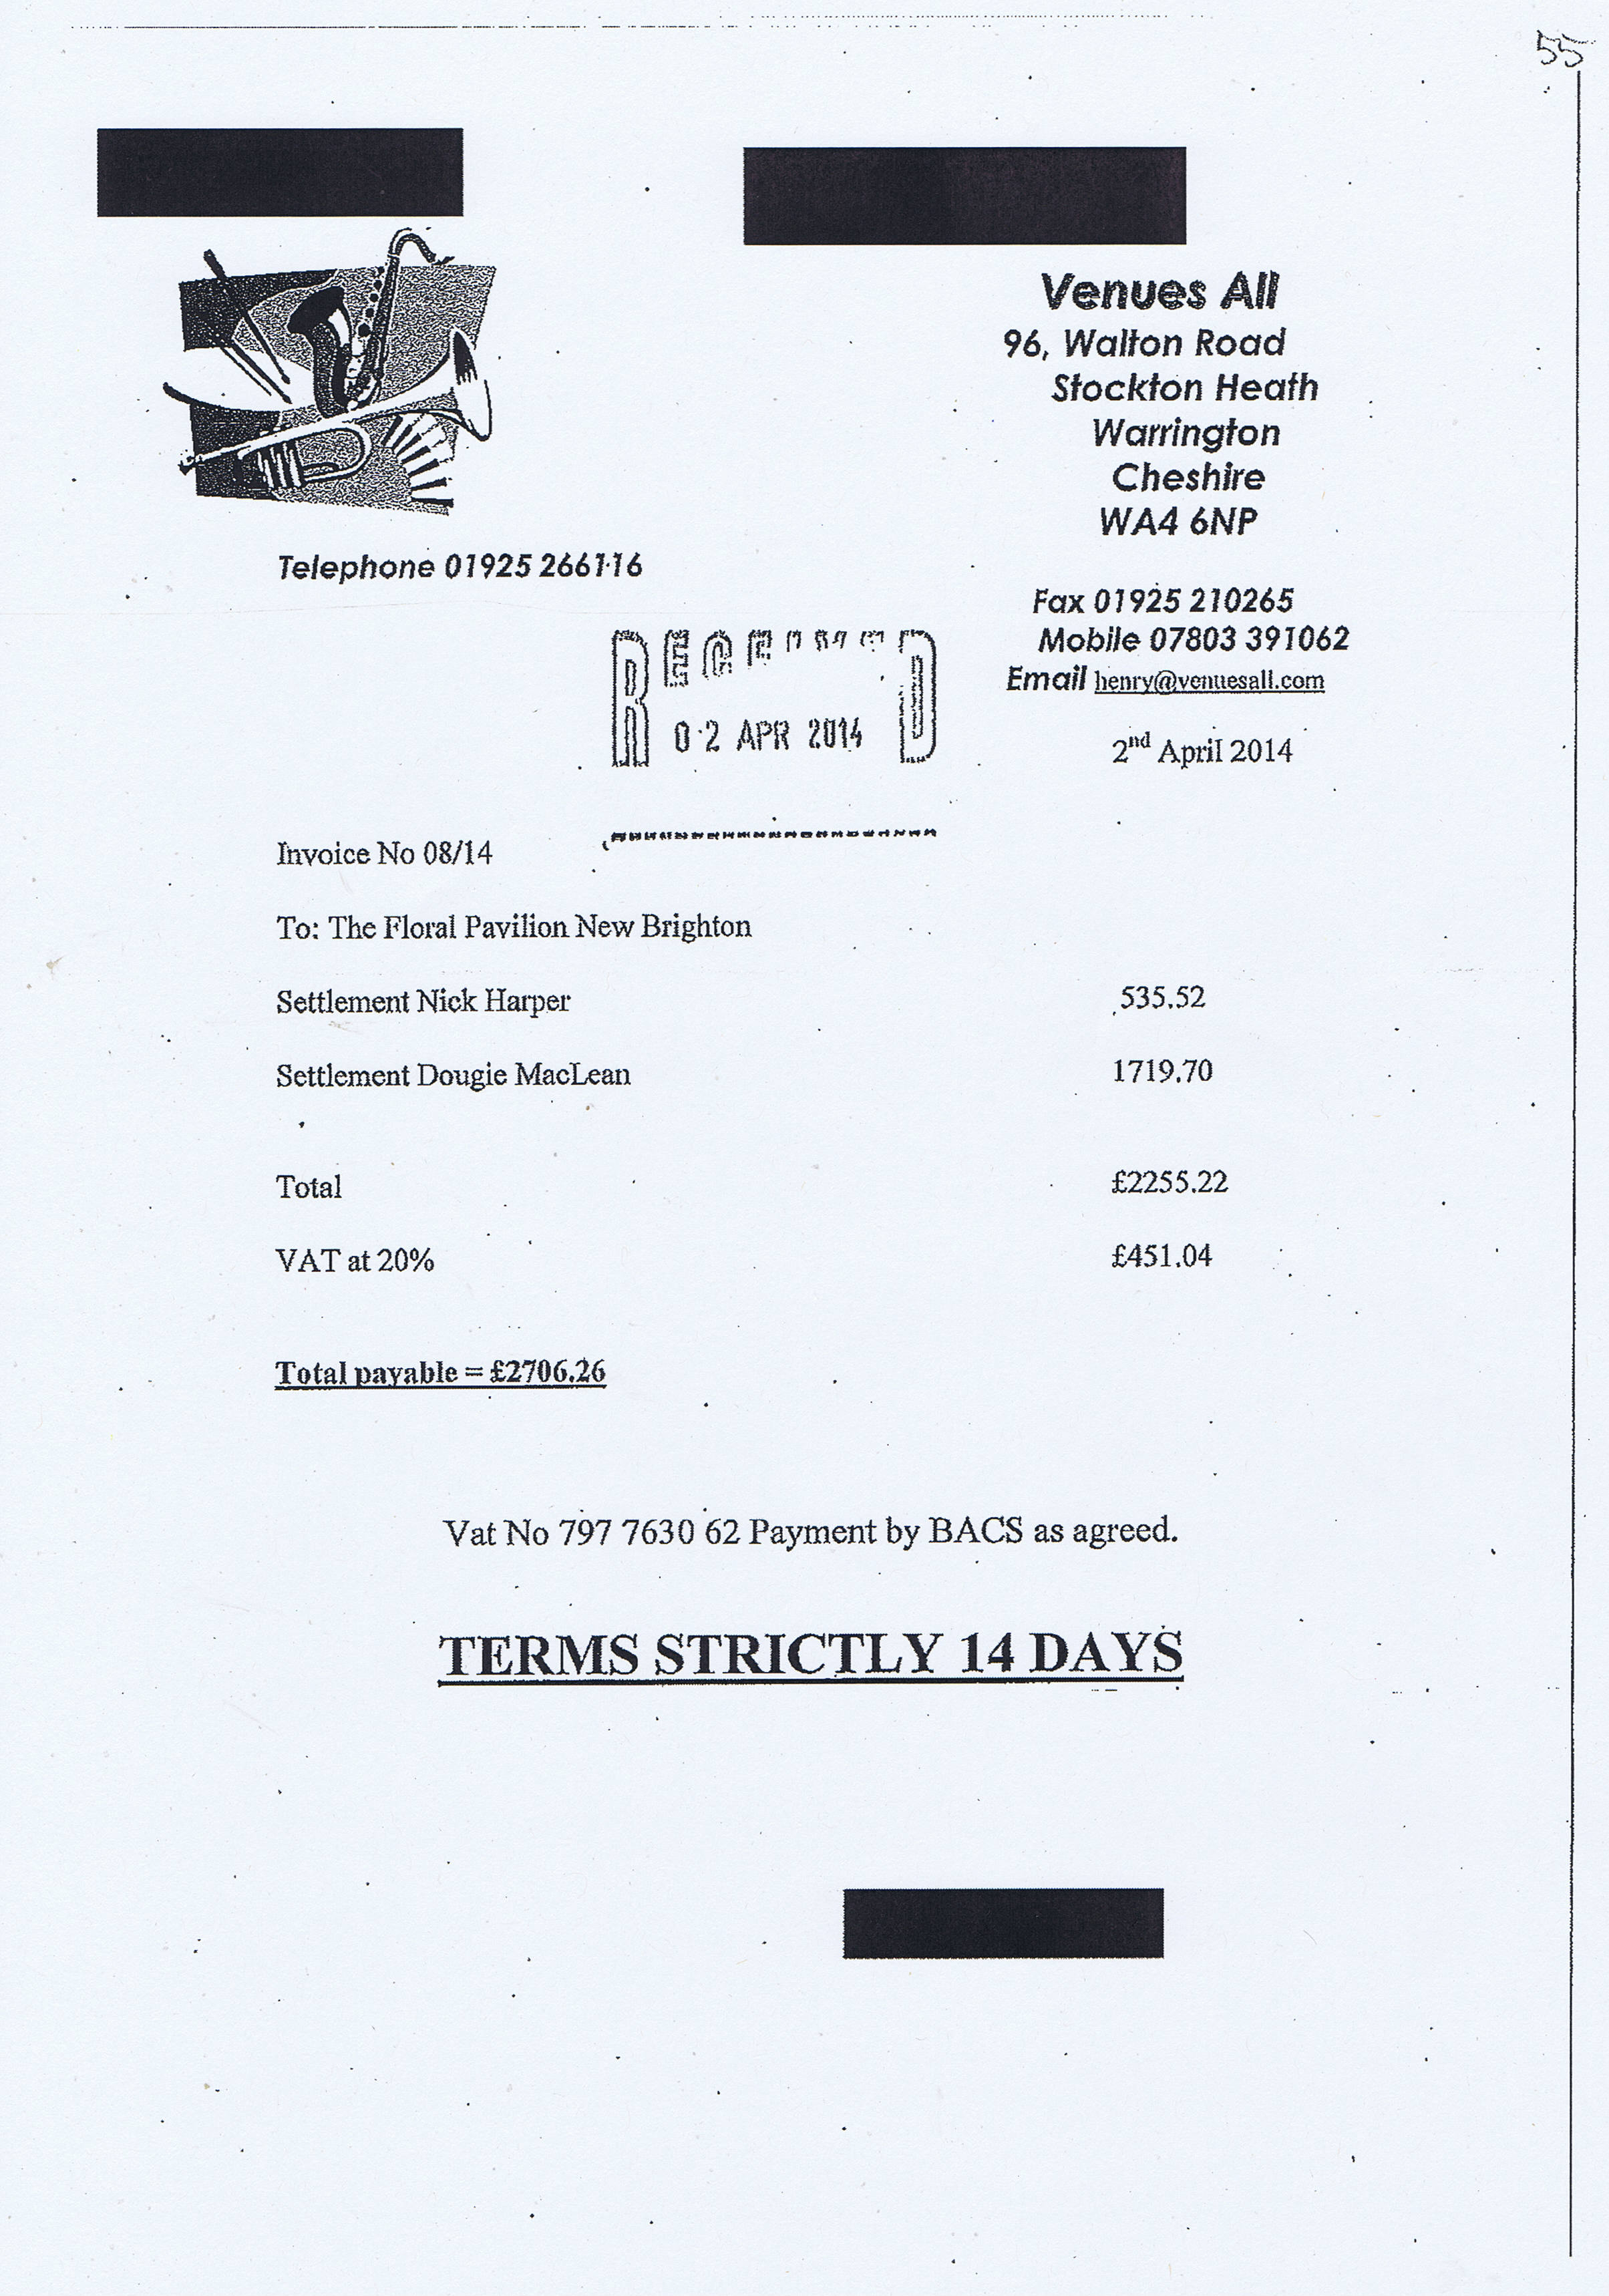 Wirral Council invoice 55 Venues All £2706.26